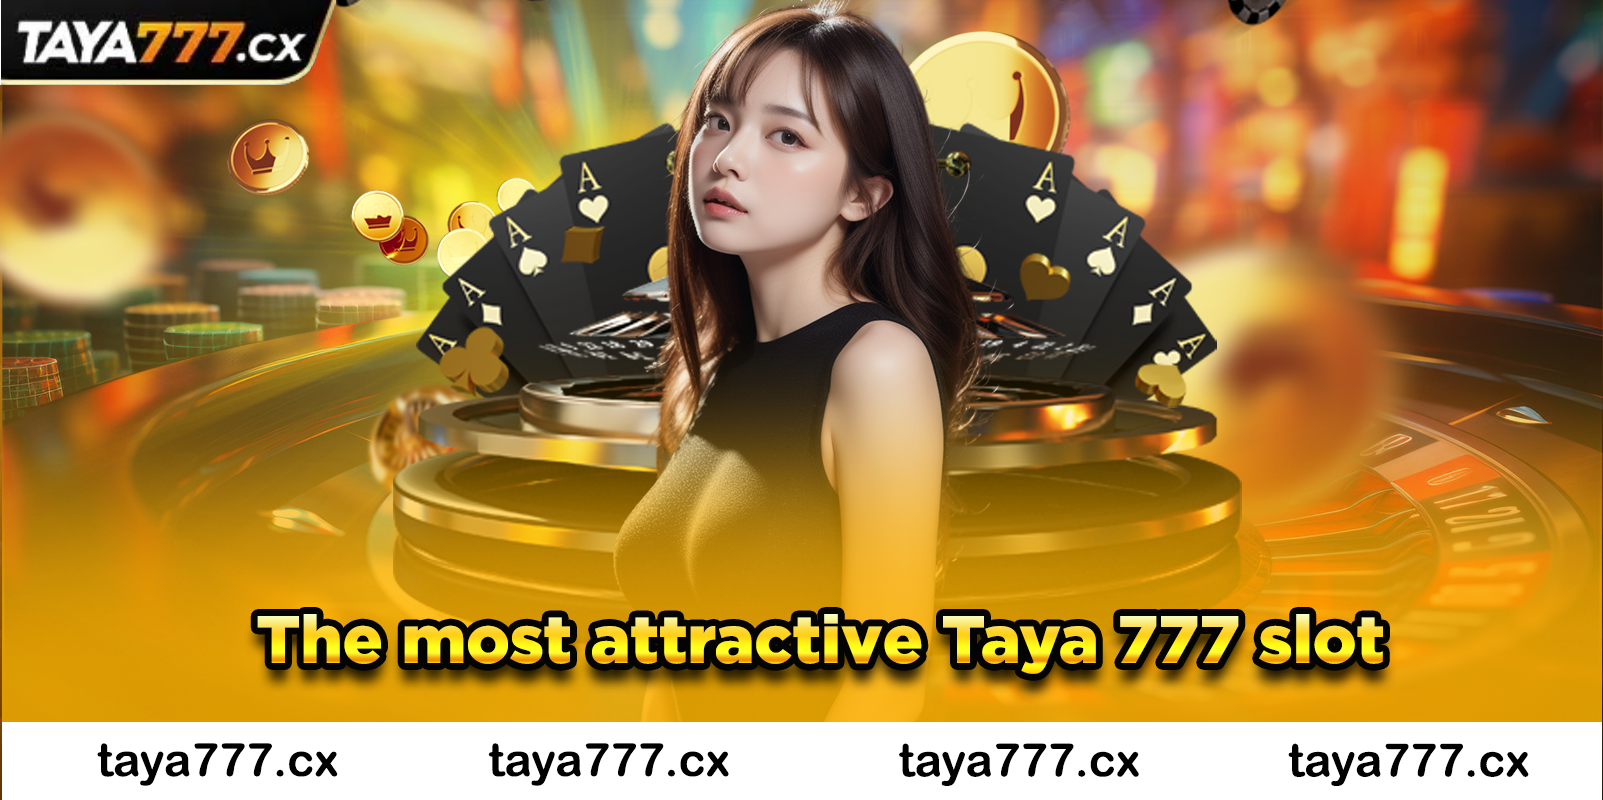 The most attractive Taya 777 slot